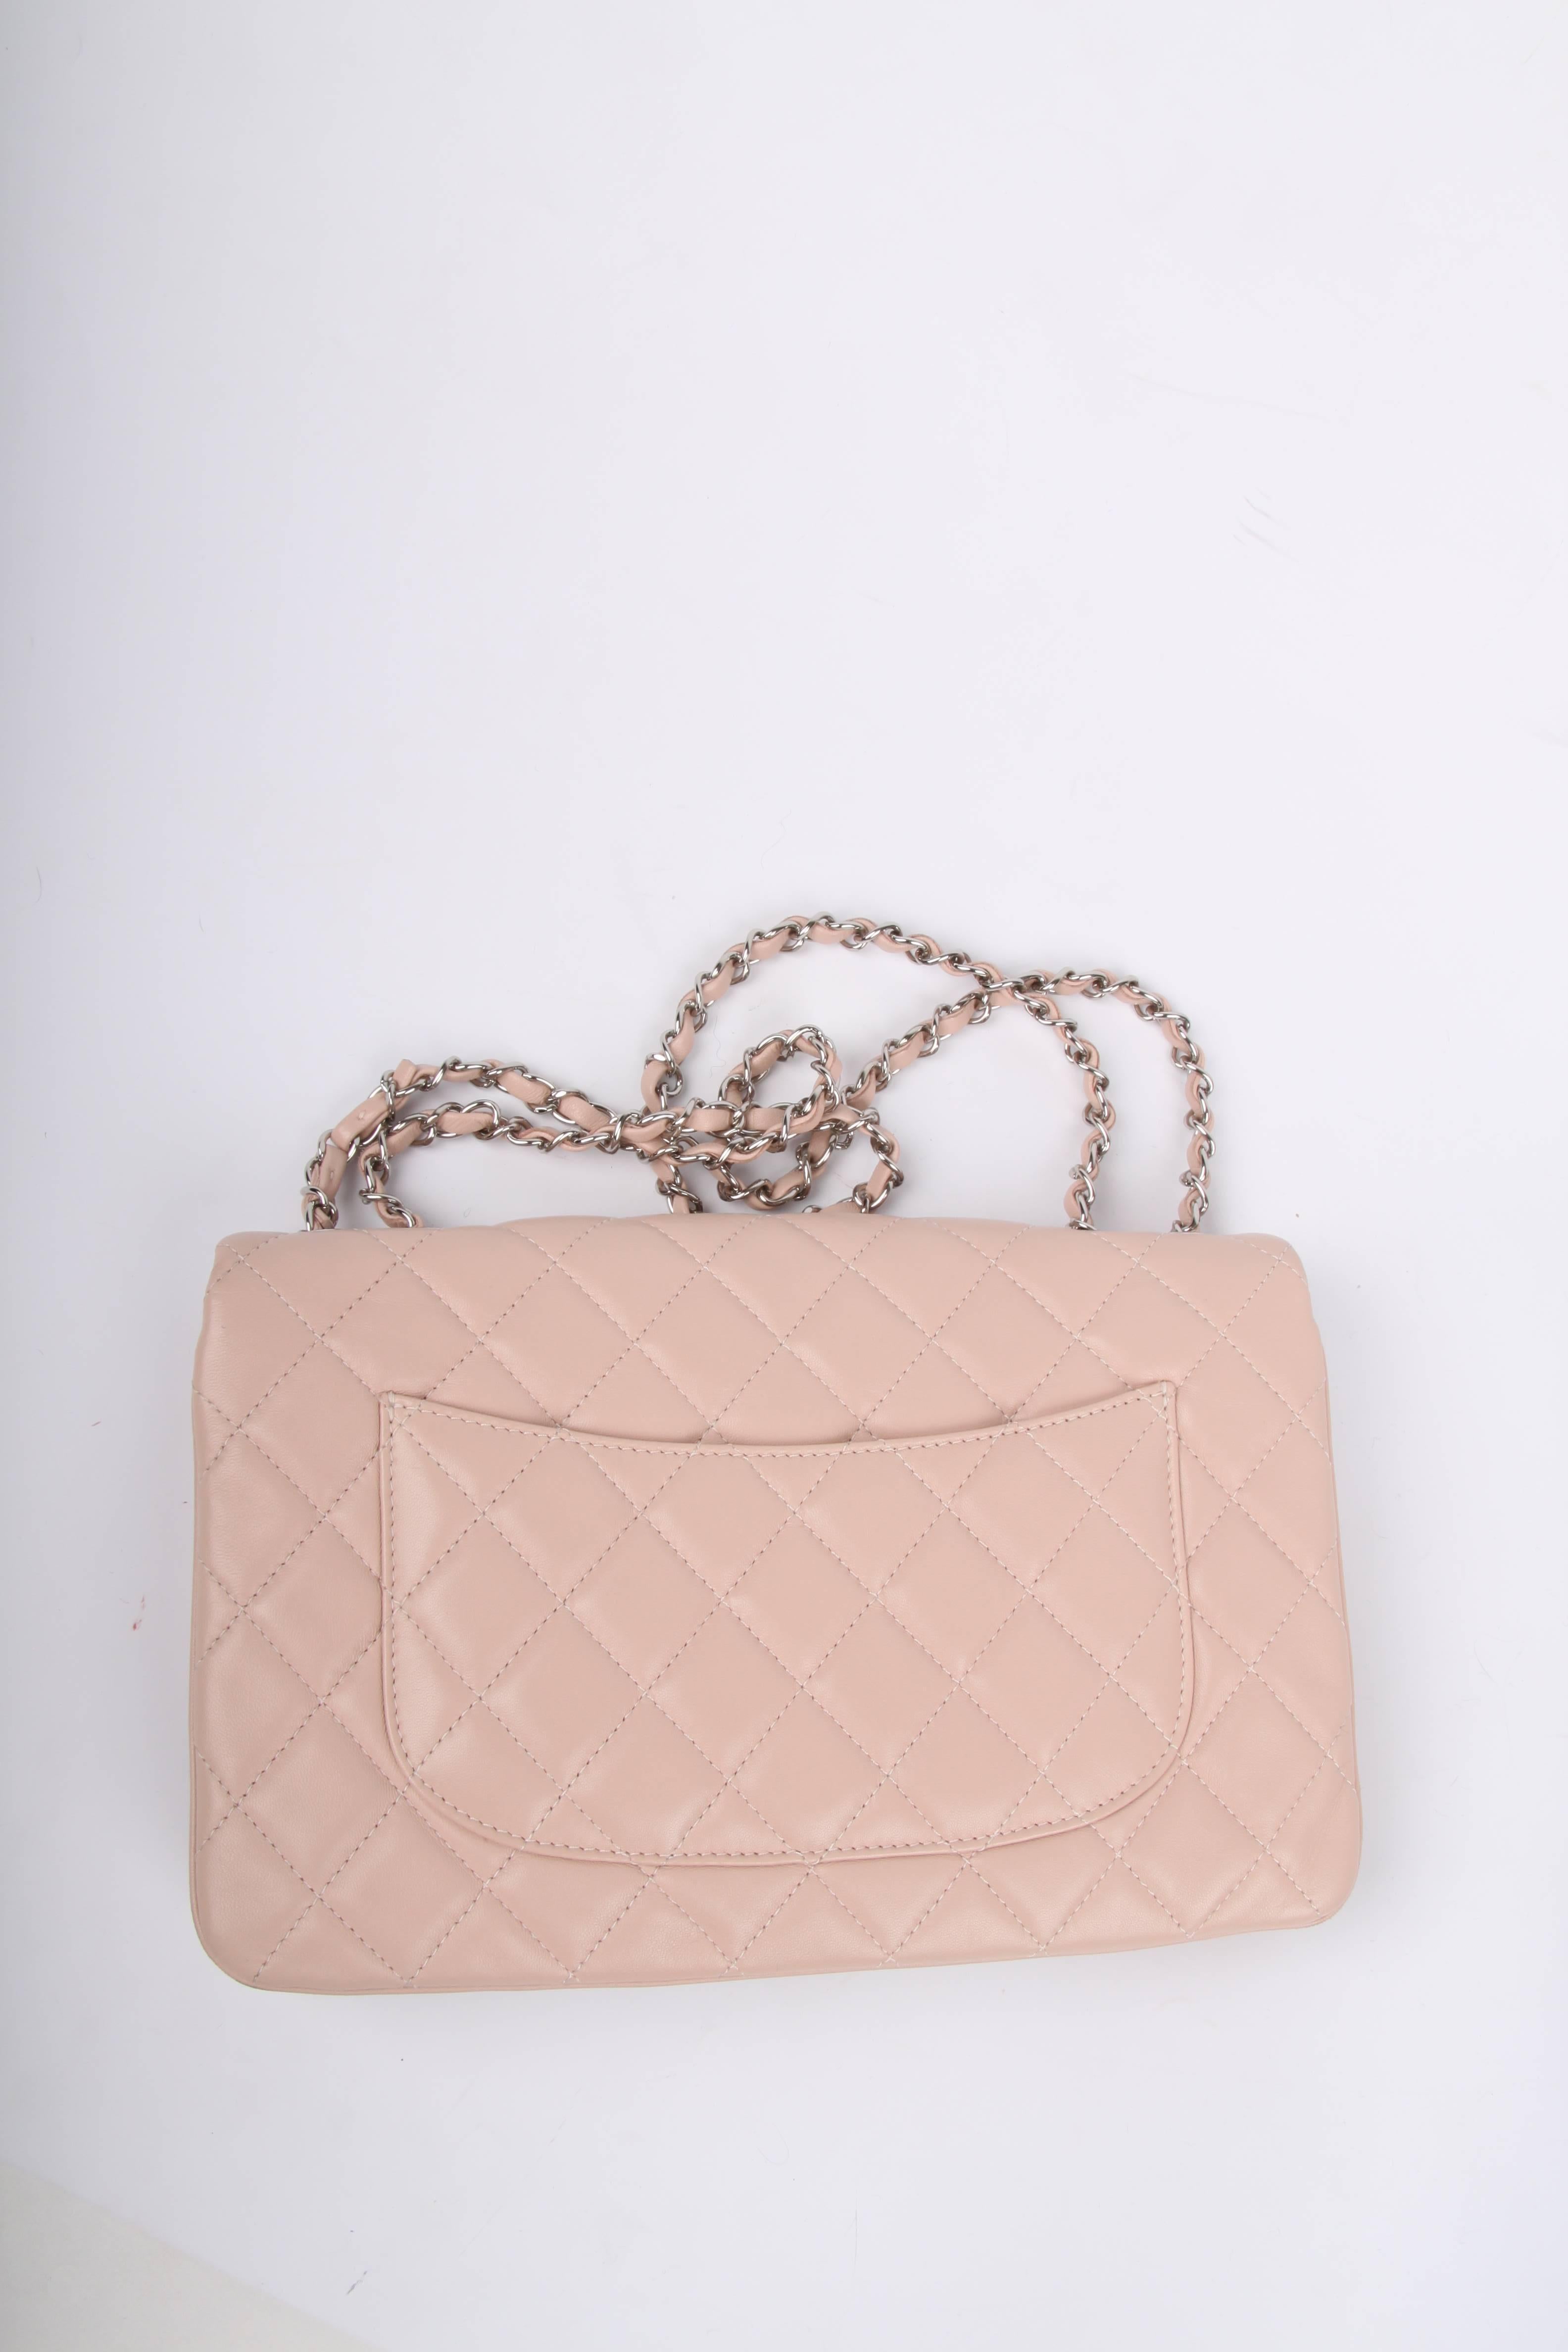 Beige Chanel Classic Flap Bag Jumbo 3 - dusty pink For Sale